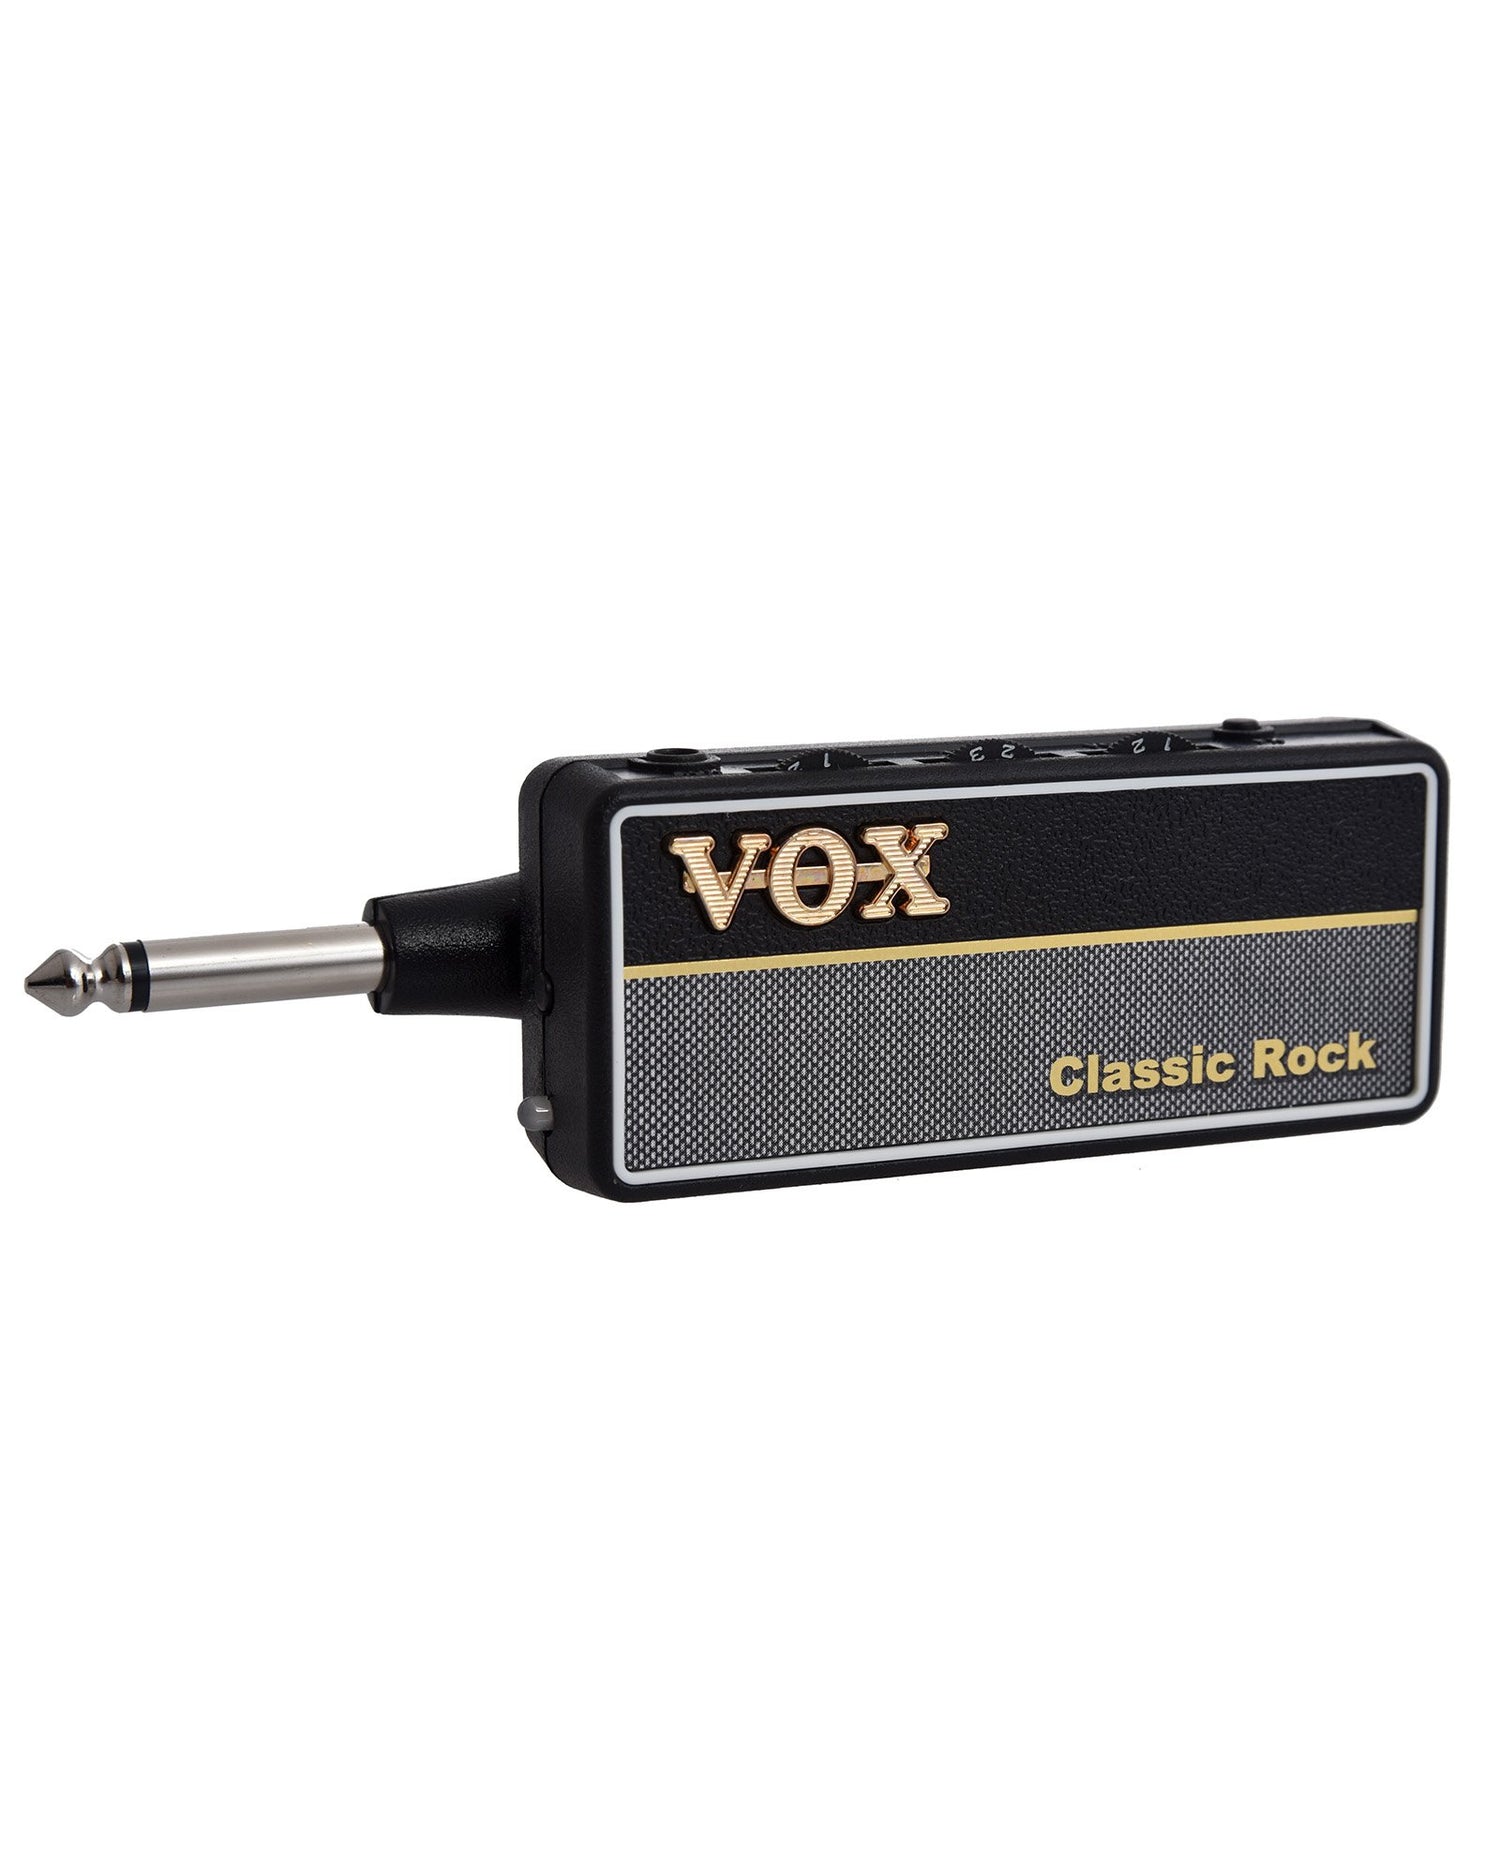 Vox Amplug G2 Headphone Amplifier, Classic Rock Model